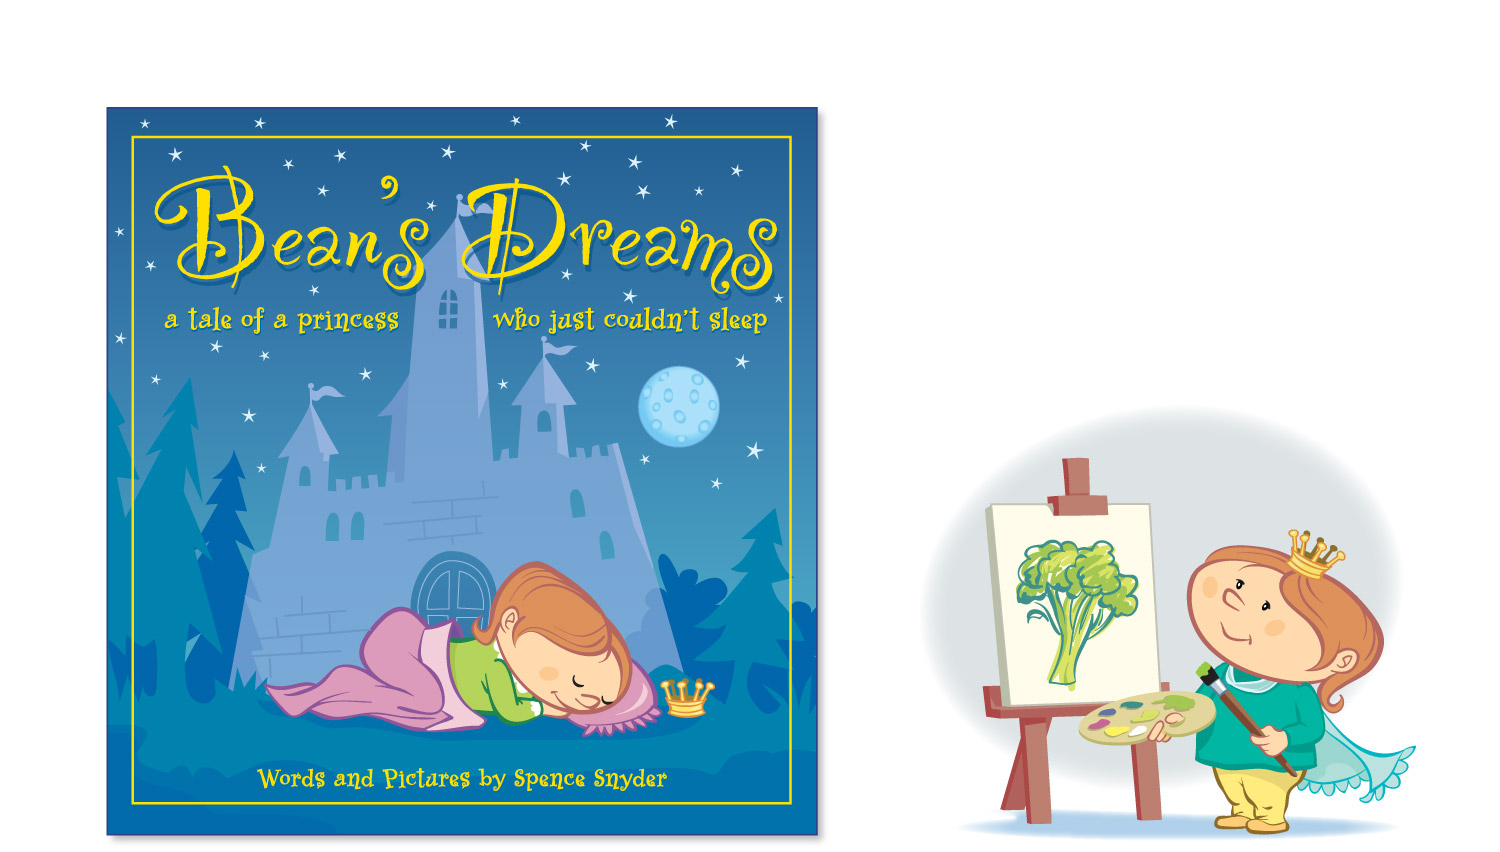 "Bean's Dreams" children's book illustrations